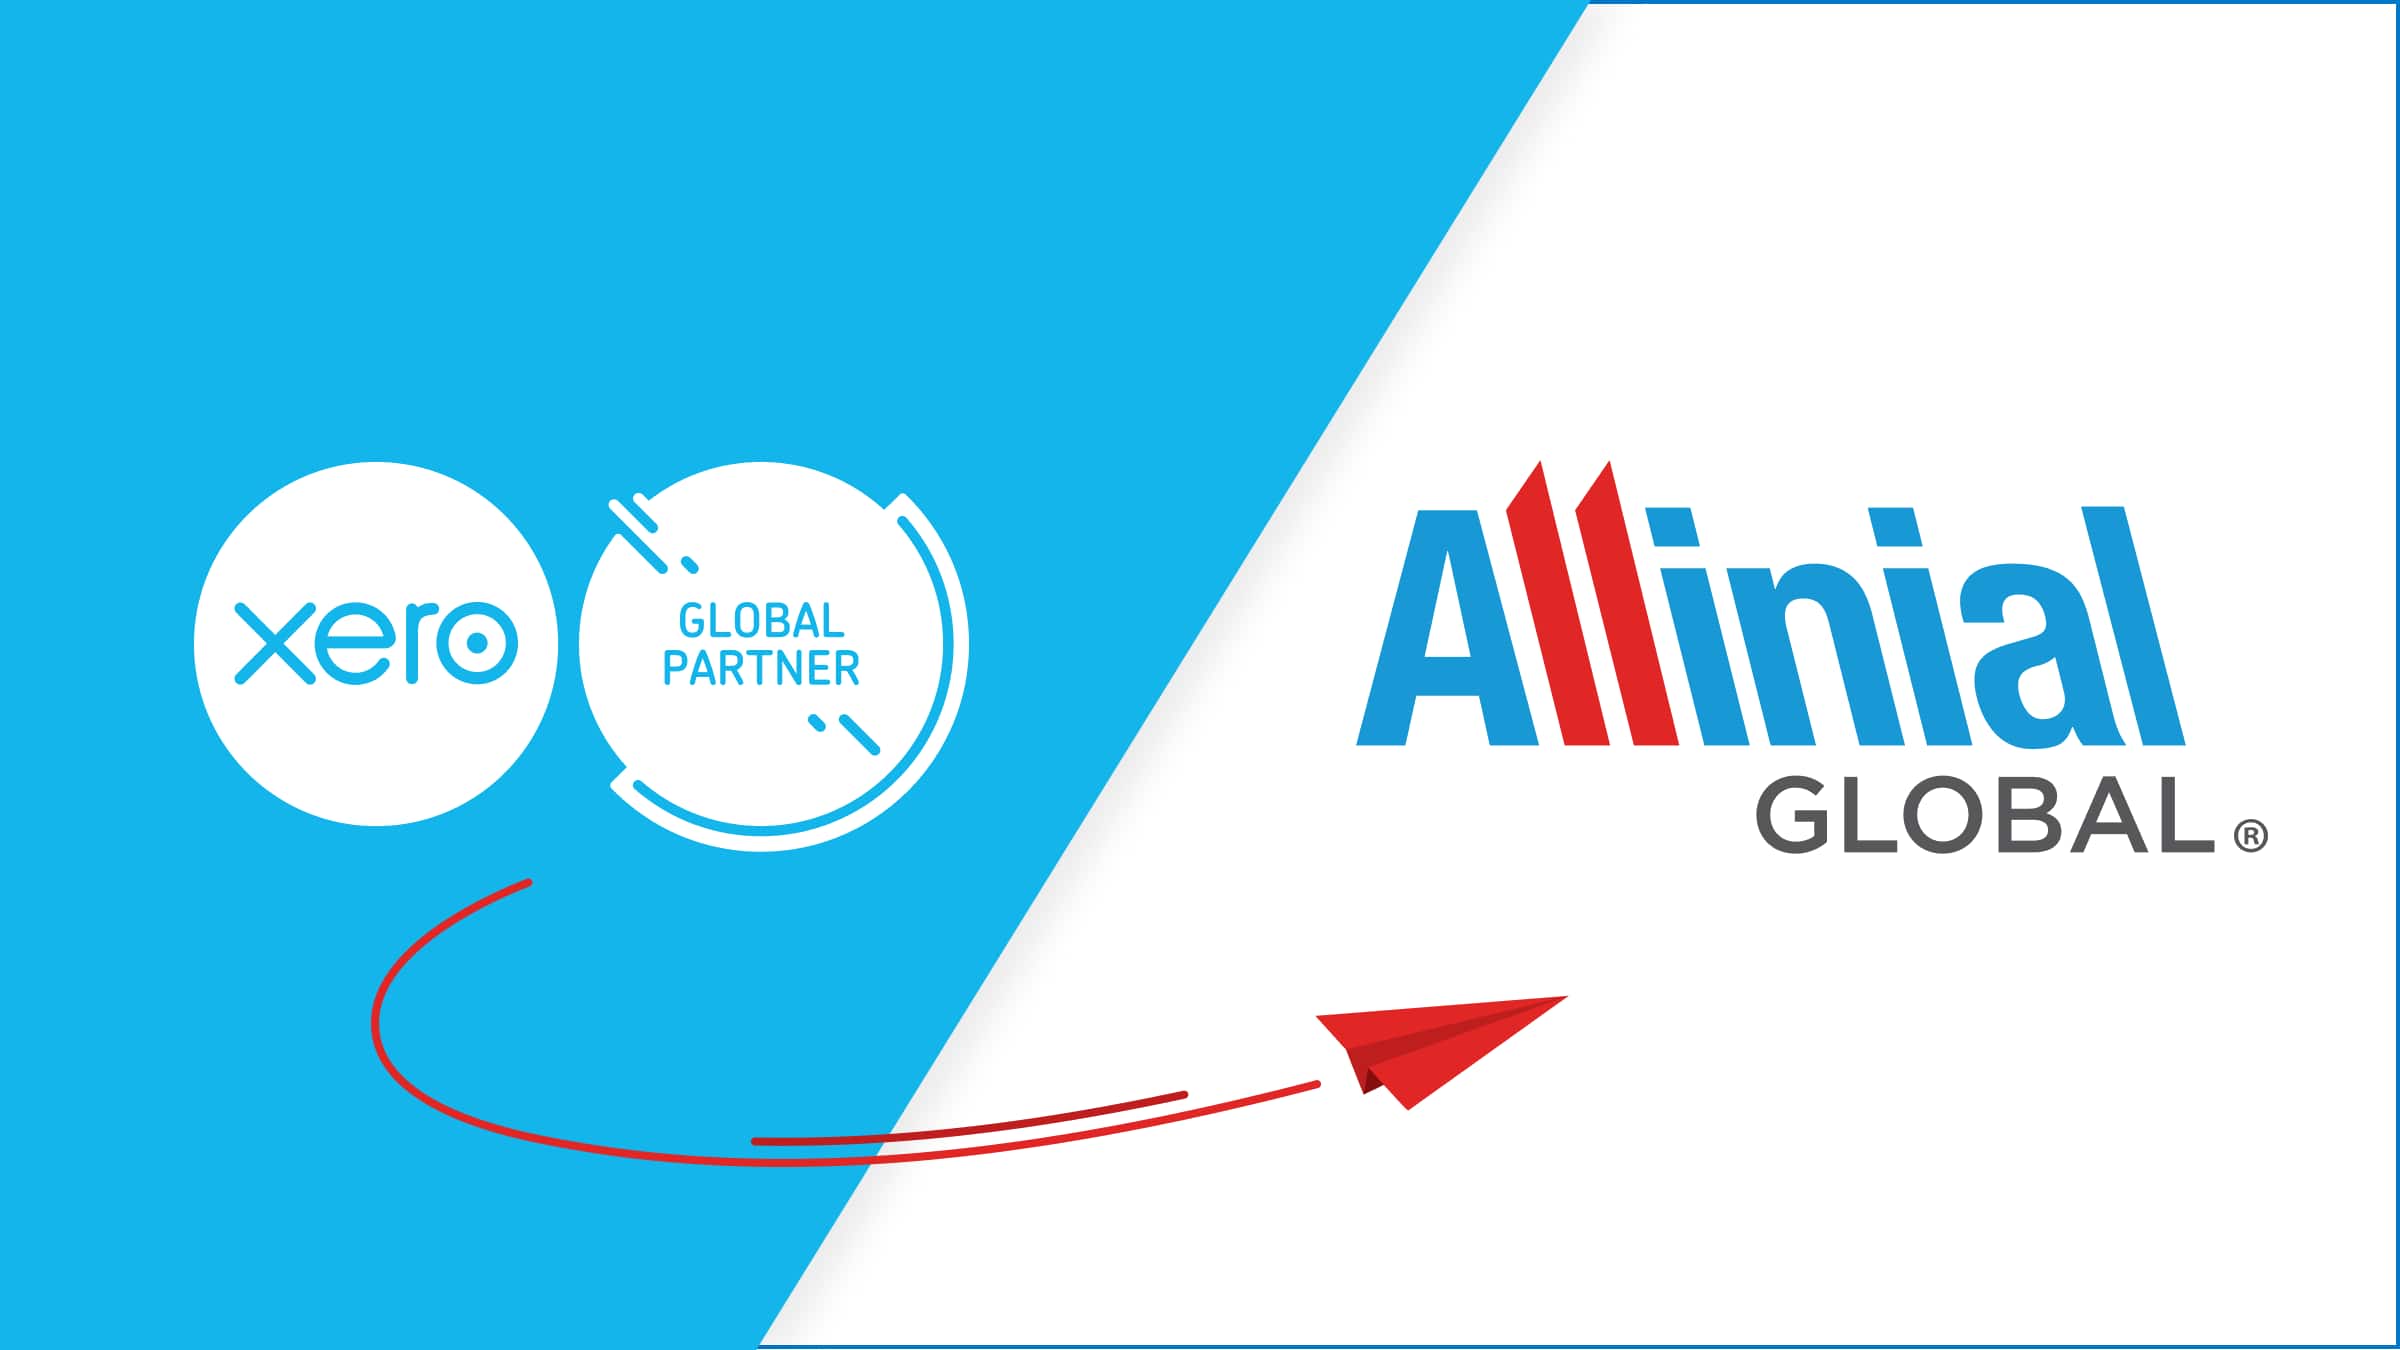 Xero in partnership with Allinial Global